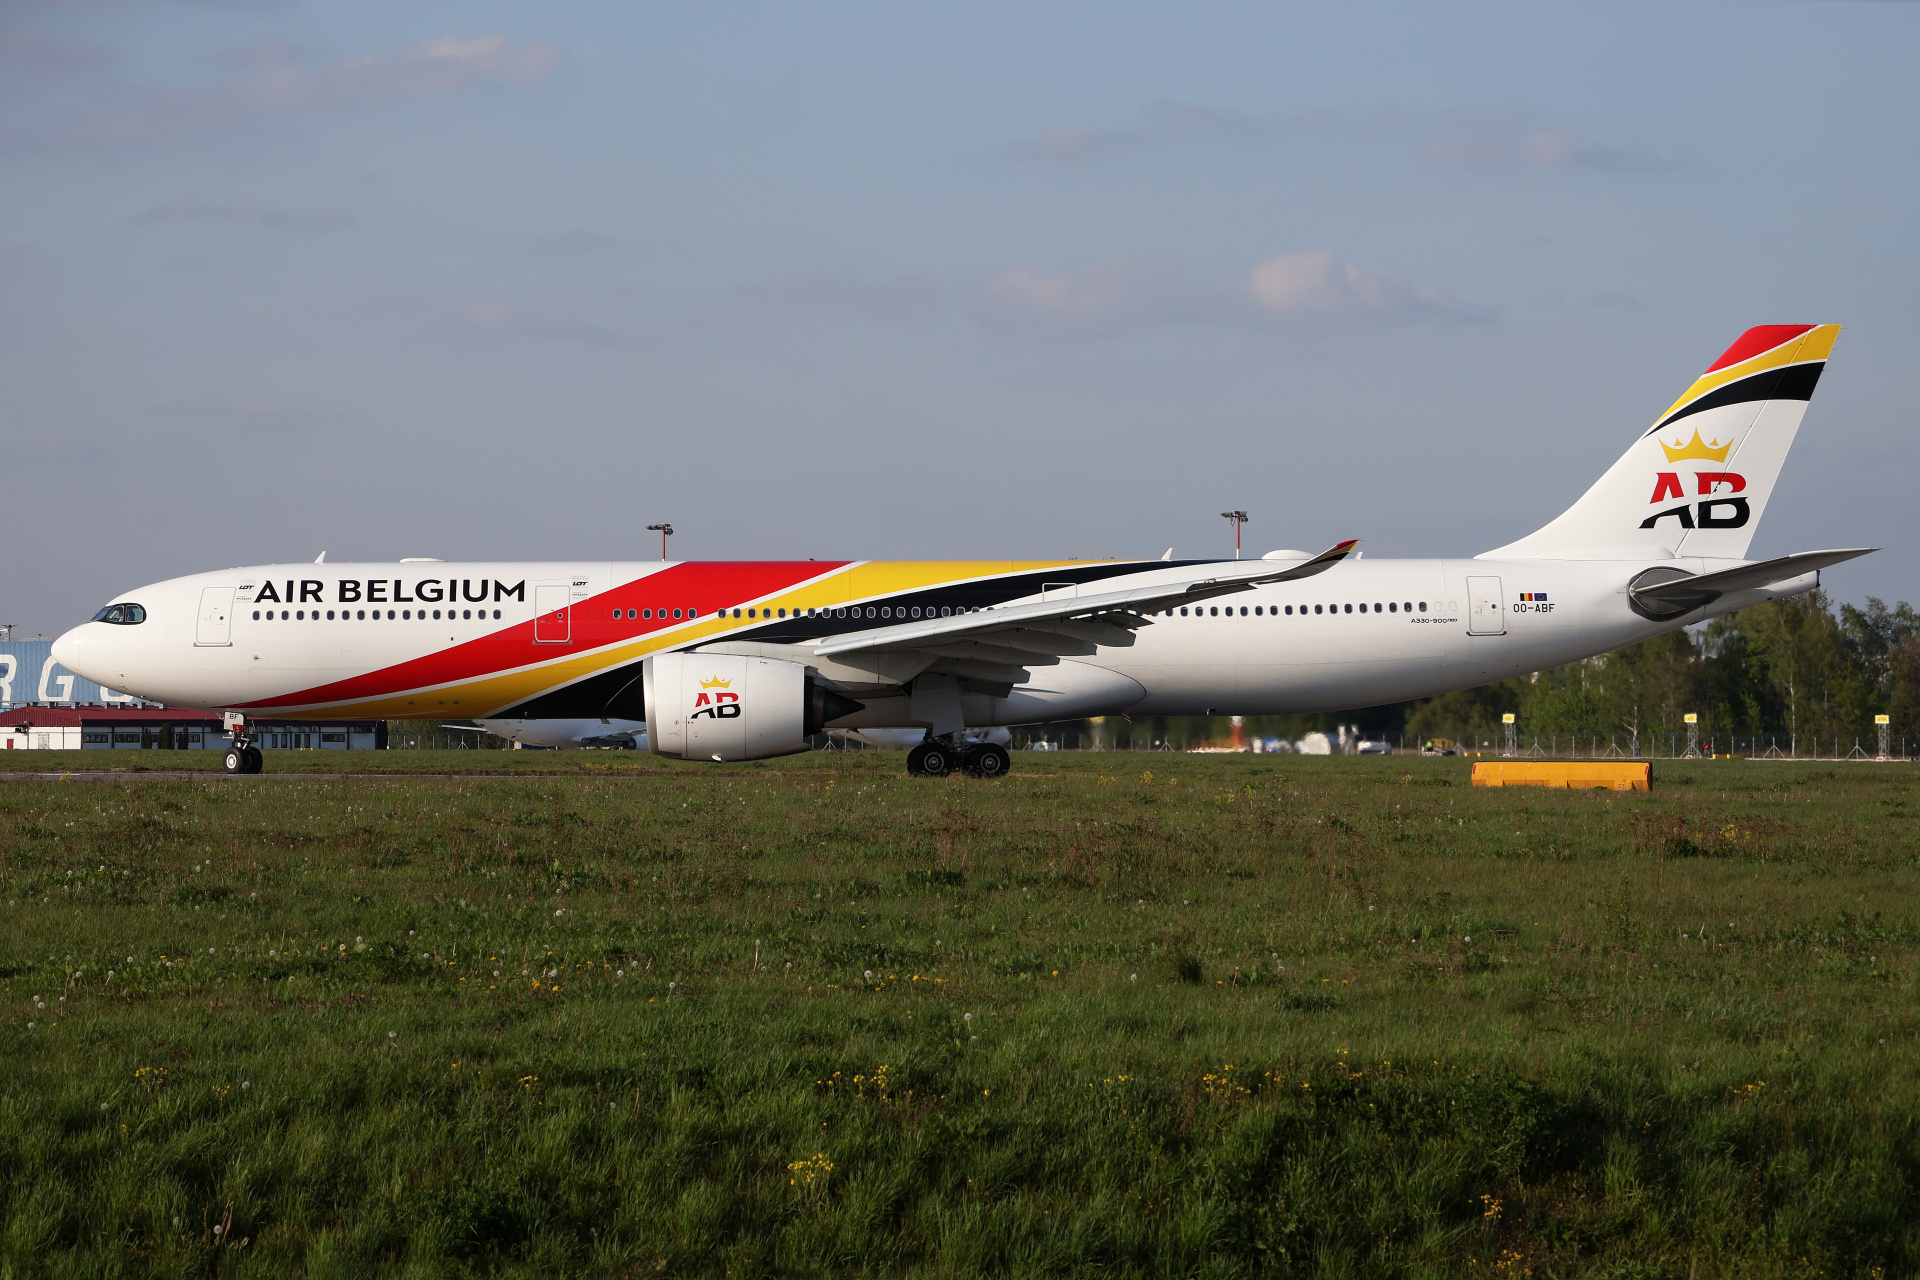 OO-ABF (Aircraft » EPWA Spotting » Airbus A330-900 (A330neo) » Air Belgium)